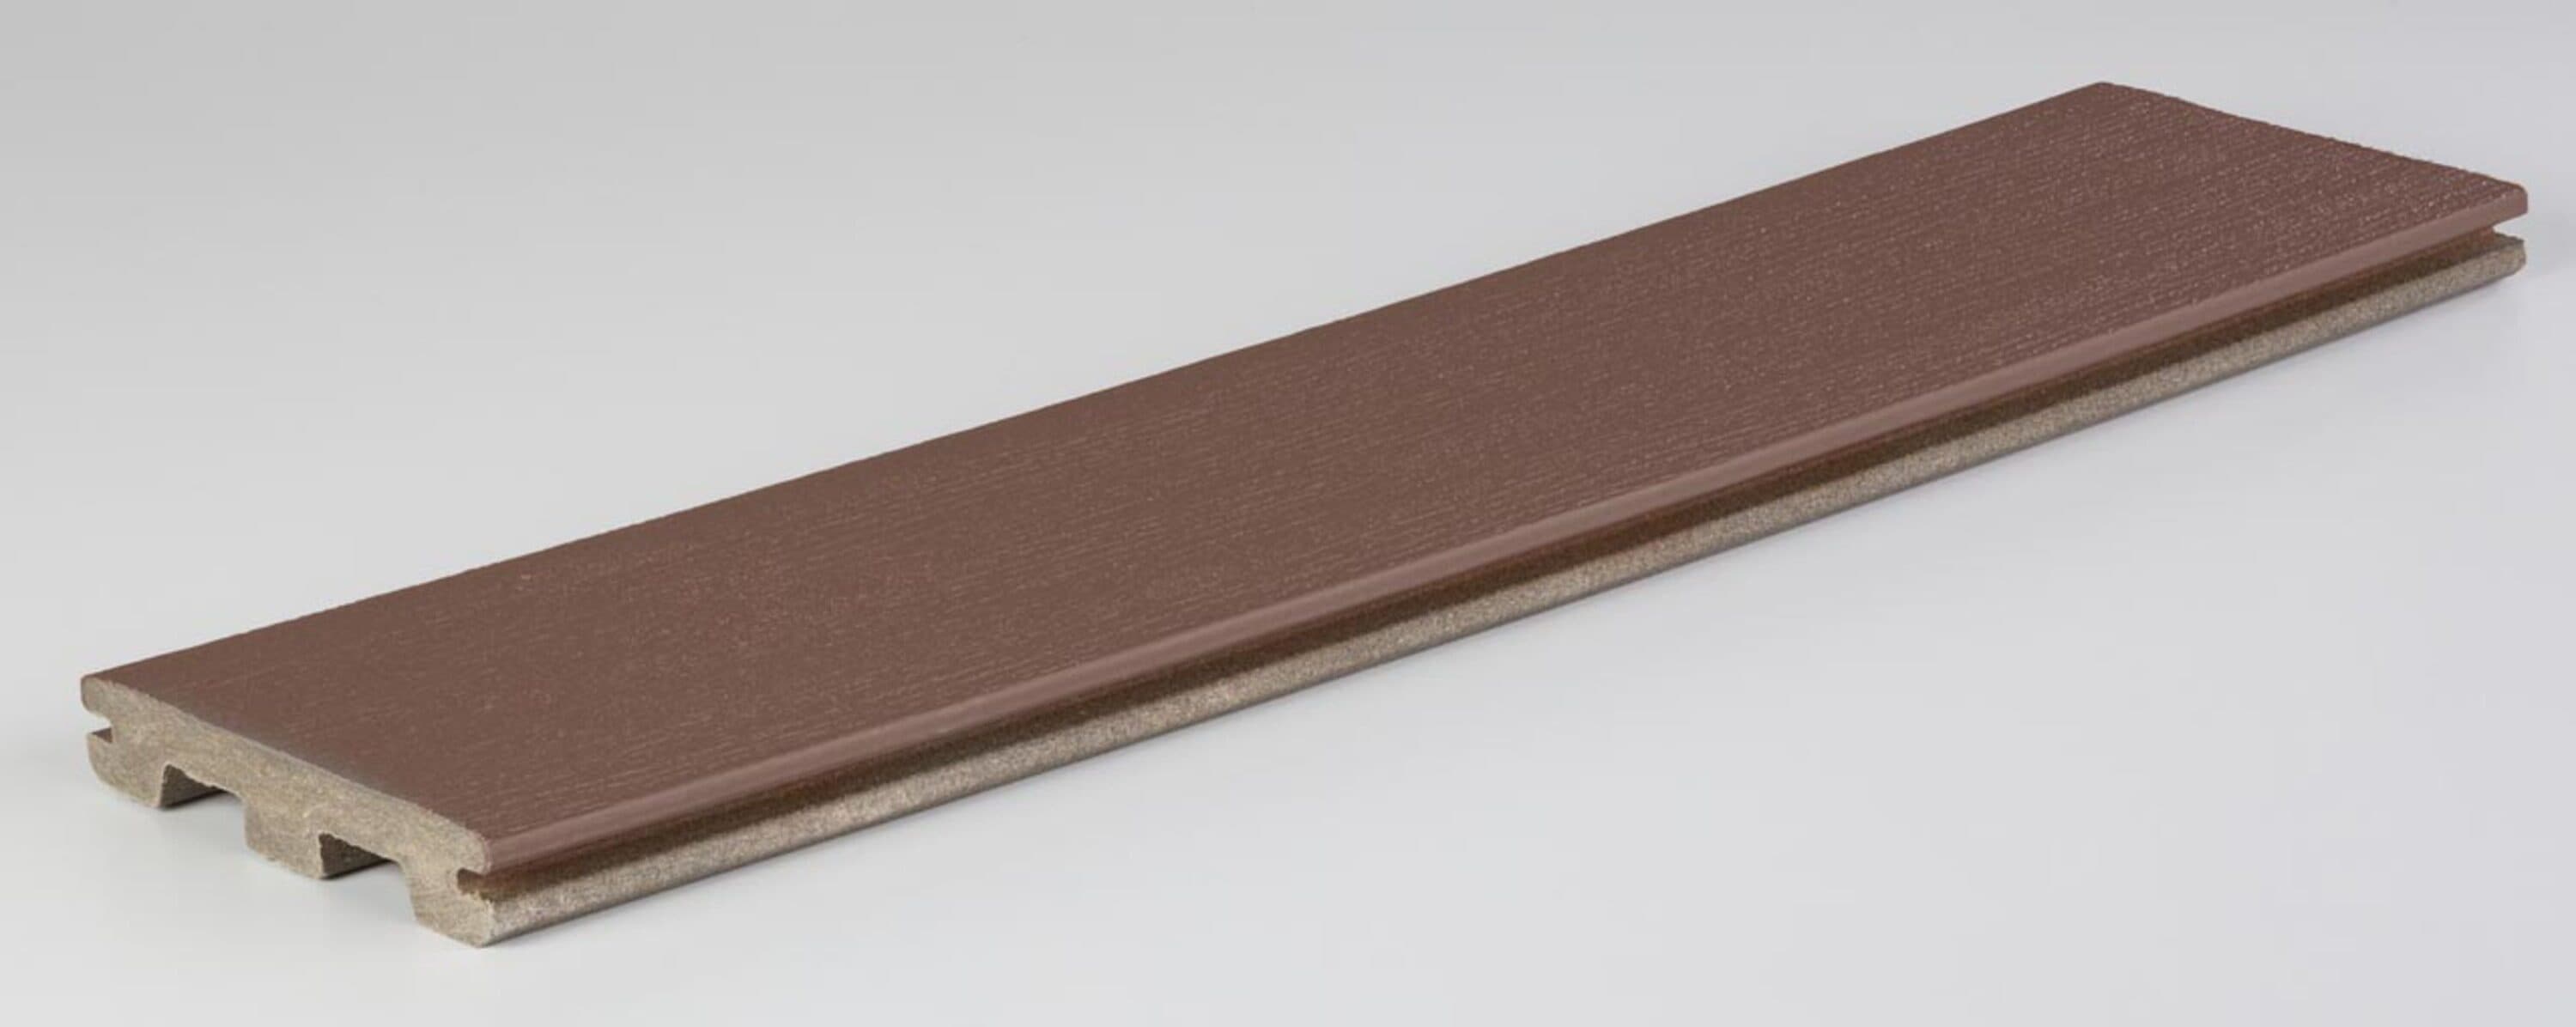 Prime 5/4-in x 6-in x 20-ft Dark Teak Grooved Composite Deck Board in Brown | - TimberTech ESGV5420DT